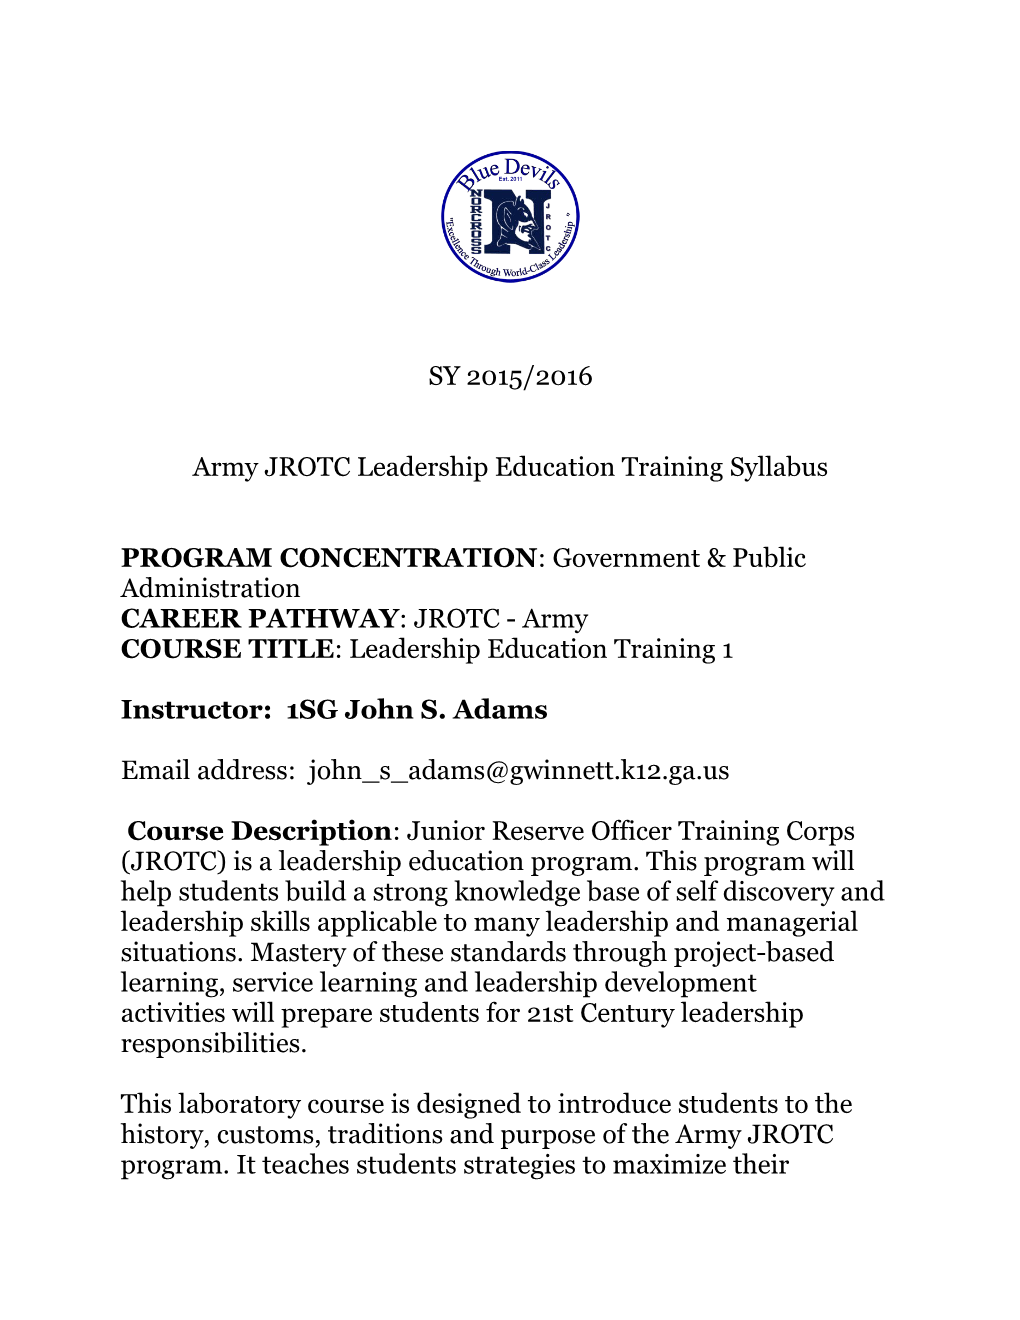 Army JROTC Leadership Education Training Syllabus